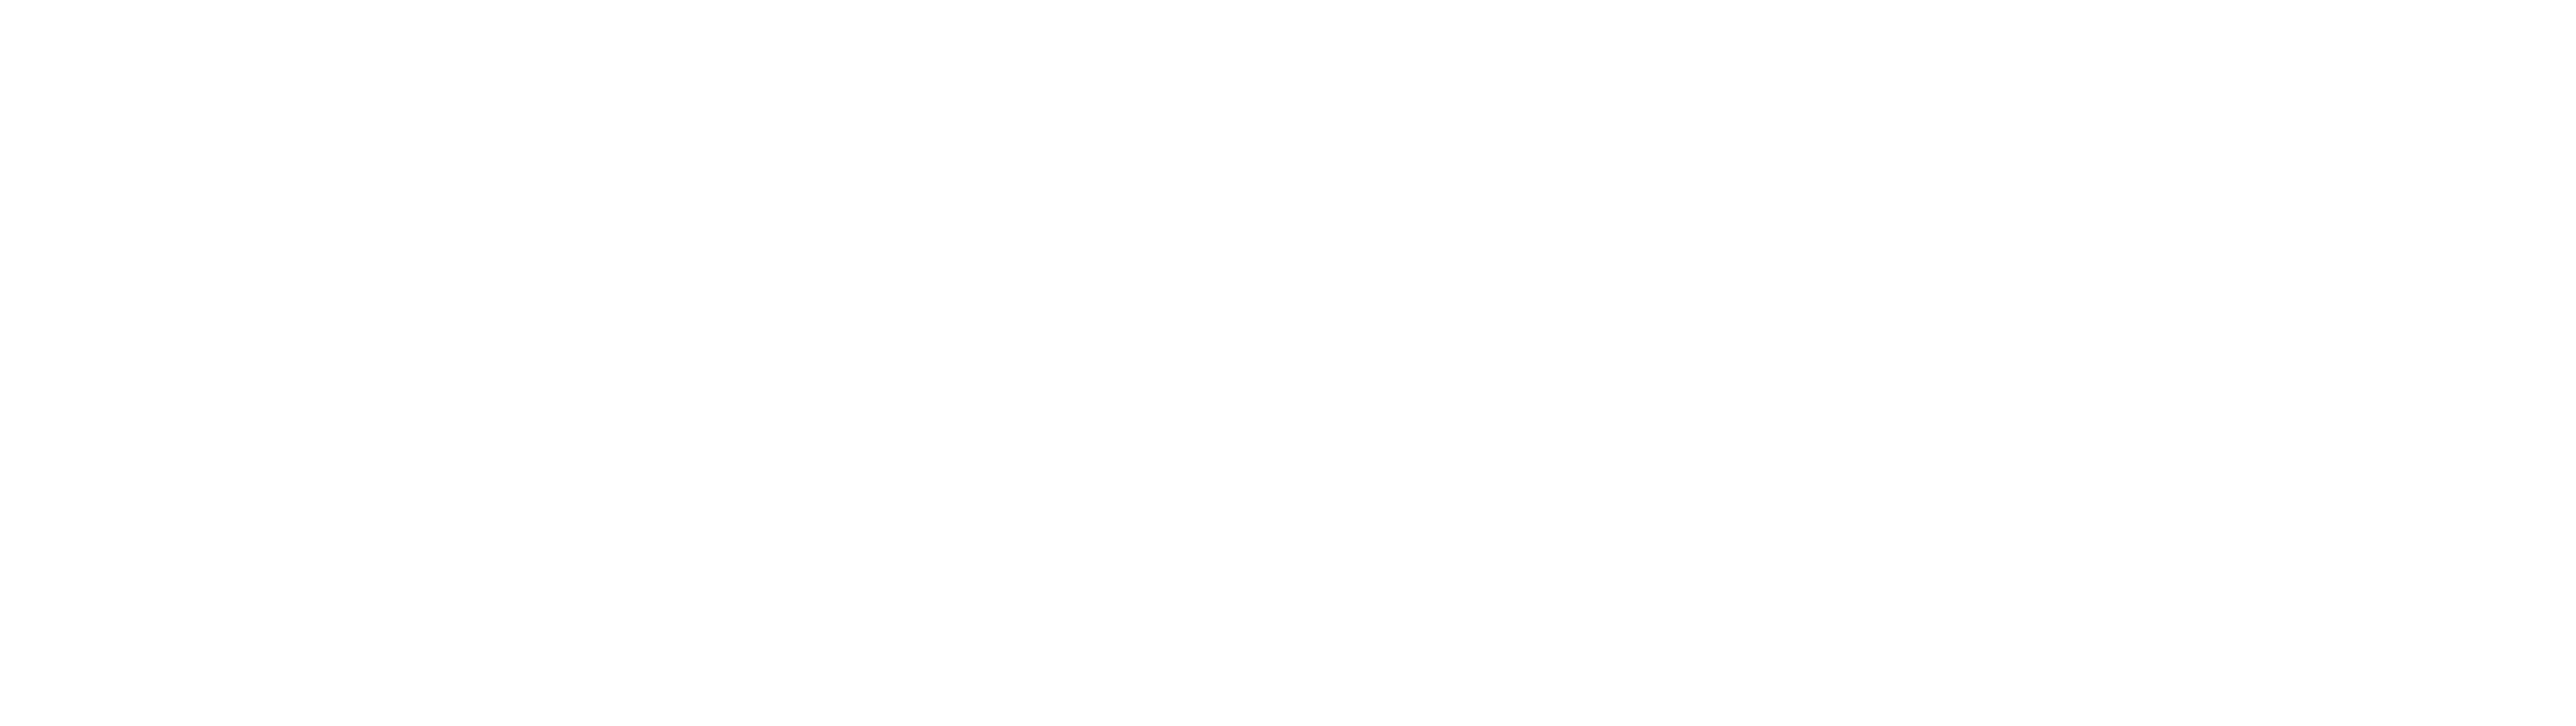 seanair logo